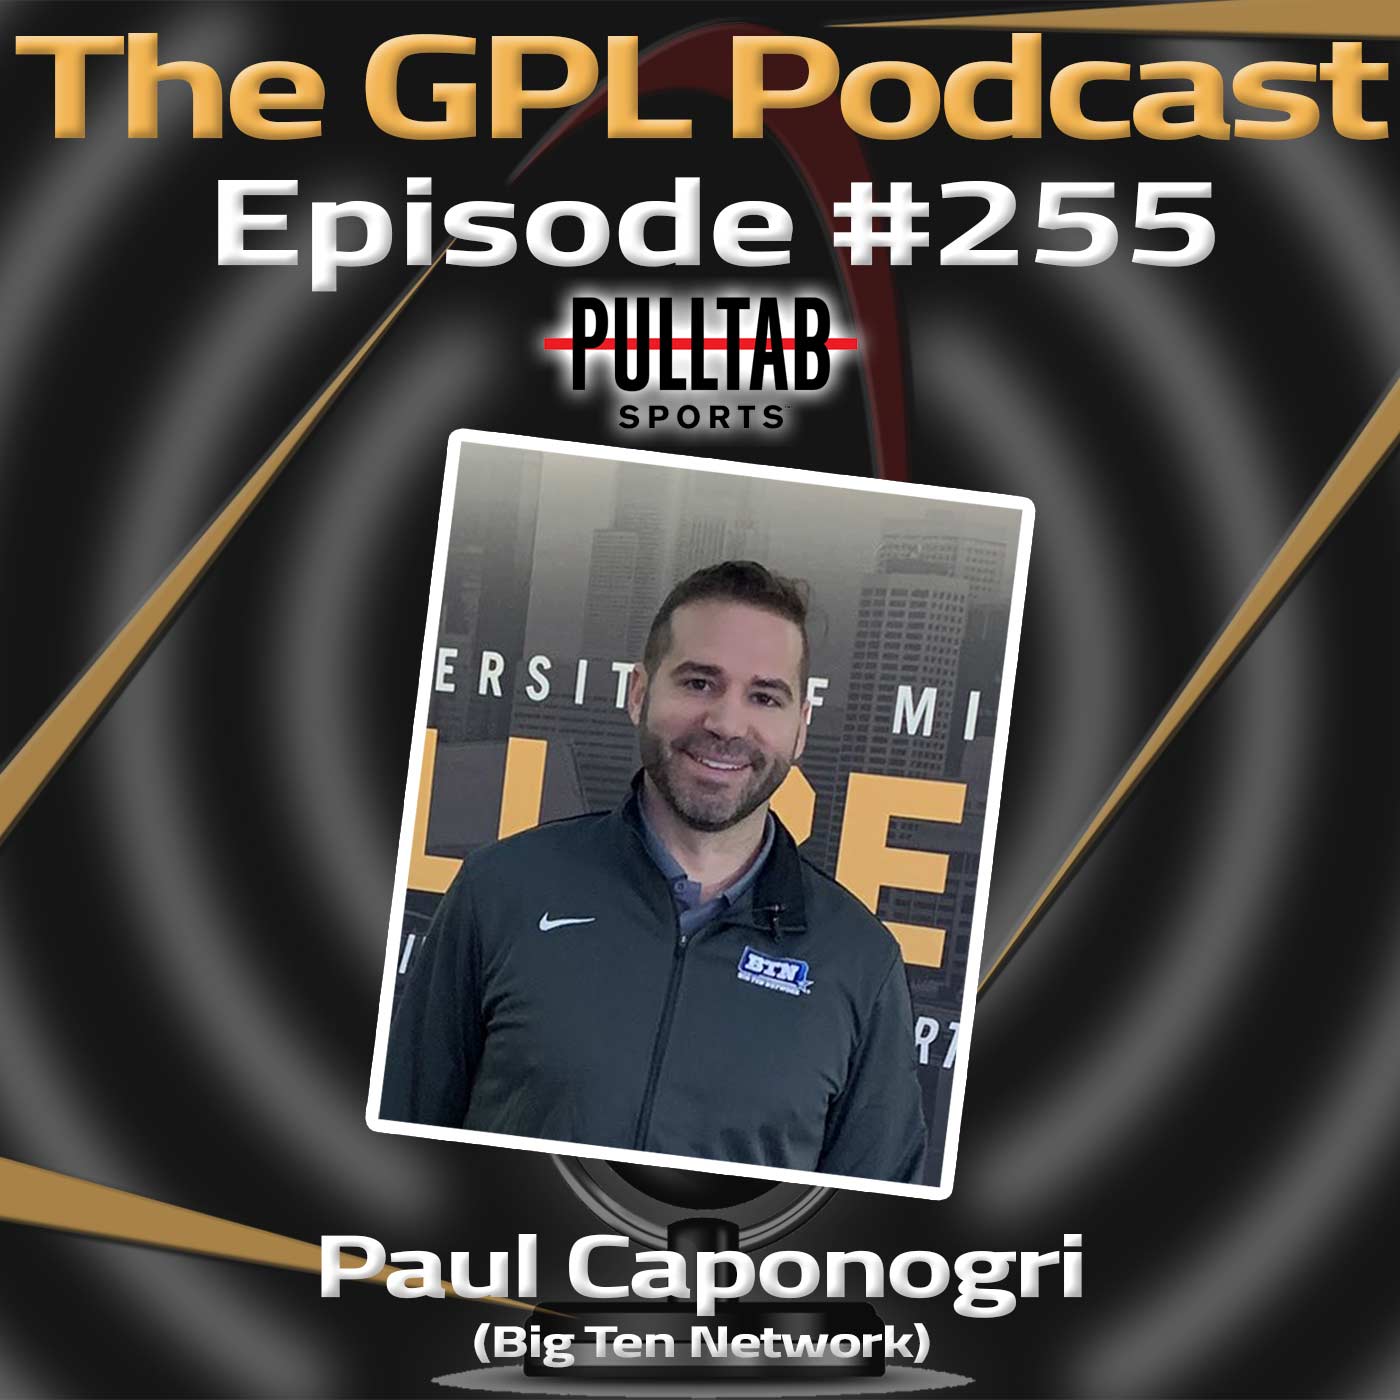 GPL Podcast #255: Paul Caponigri is back!